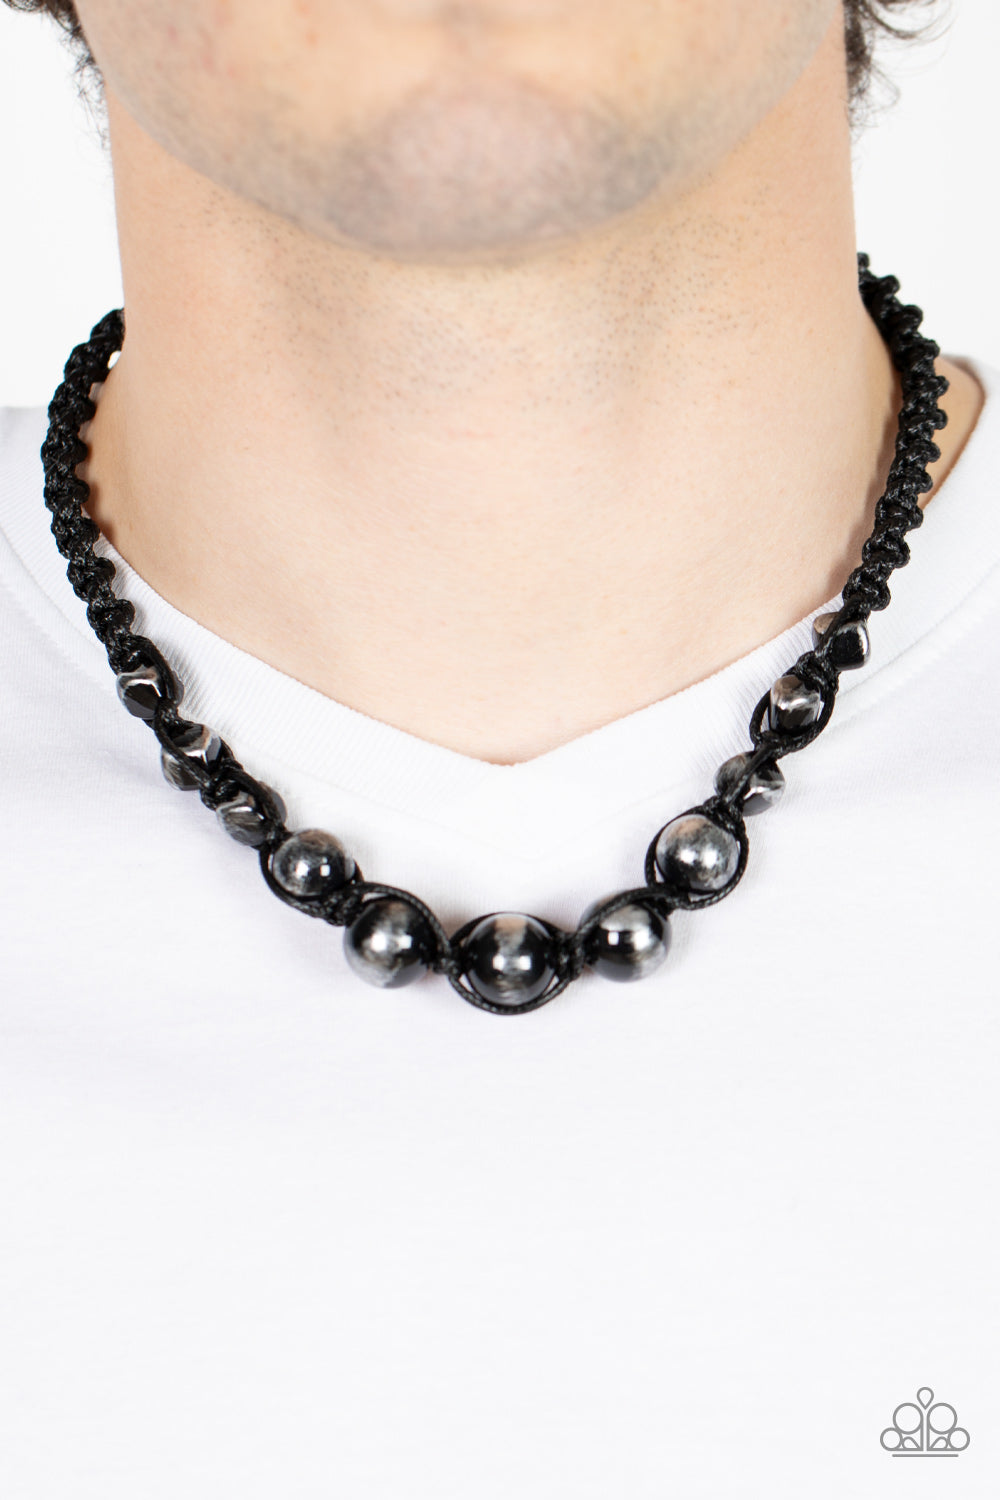 Paparazzi Accessories: Loose Cannon - Black Urban Necklace